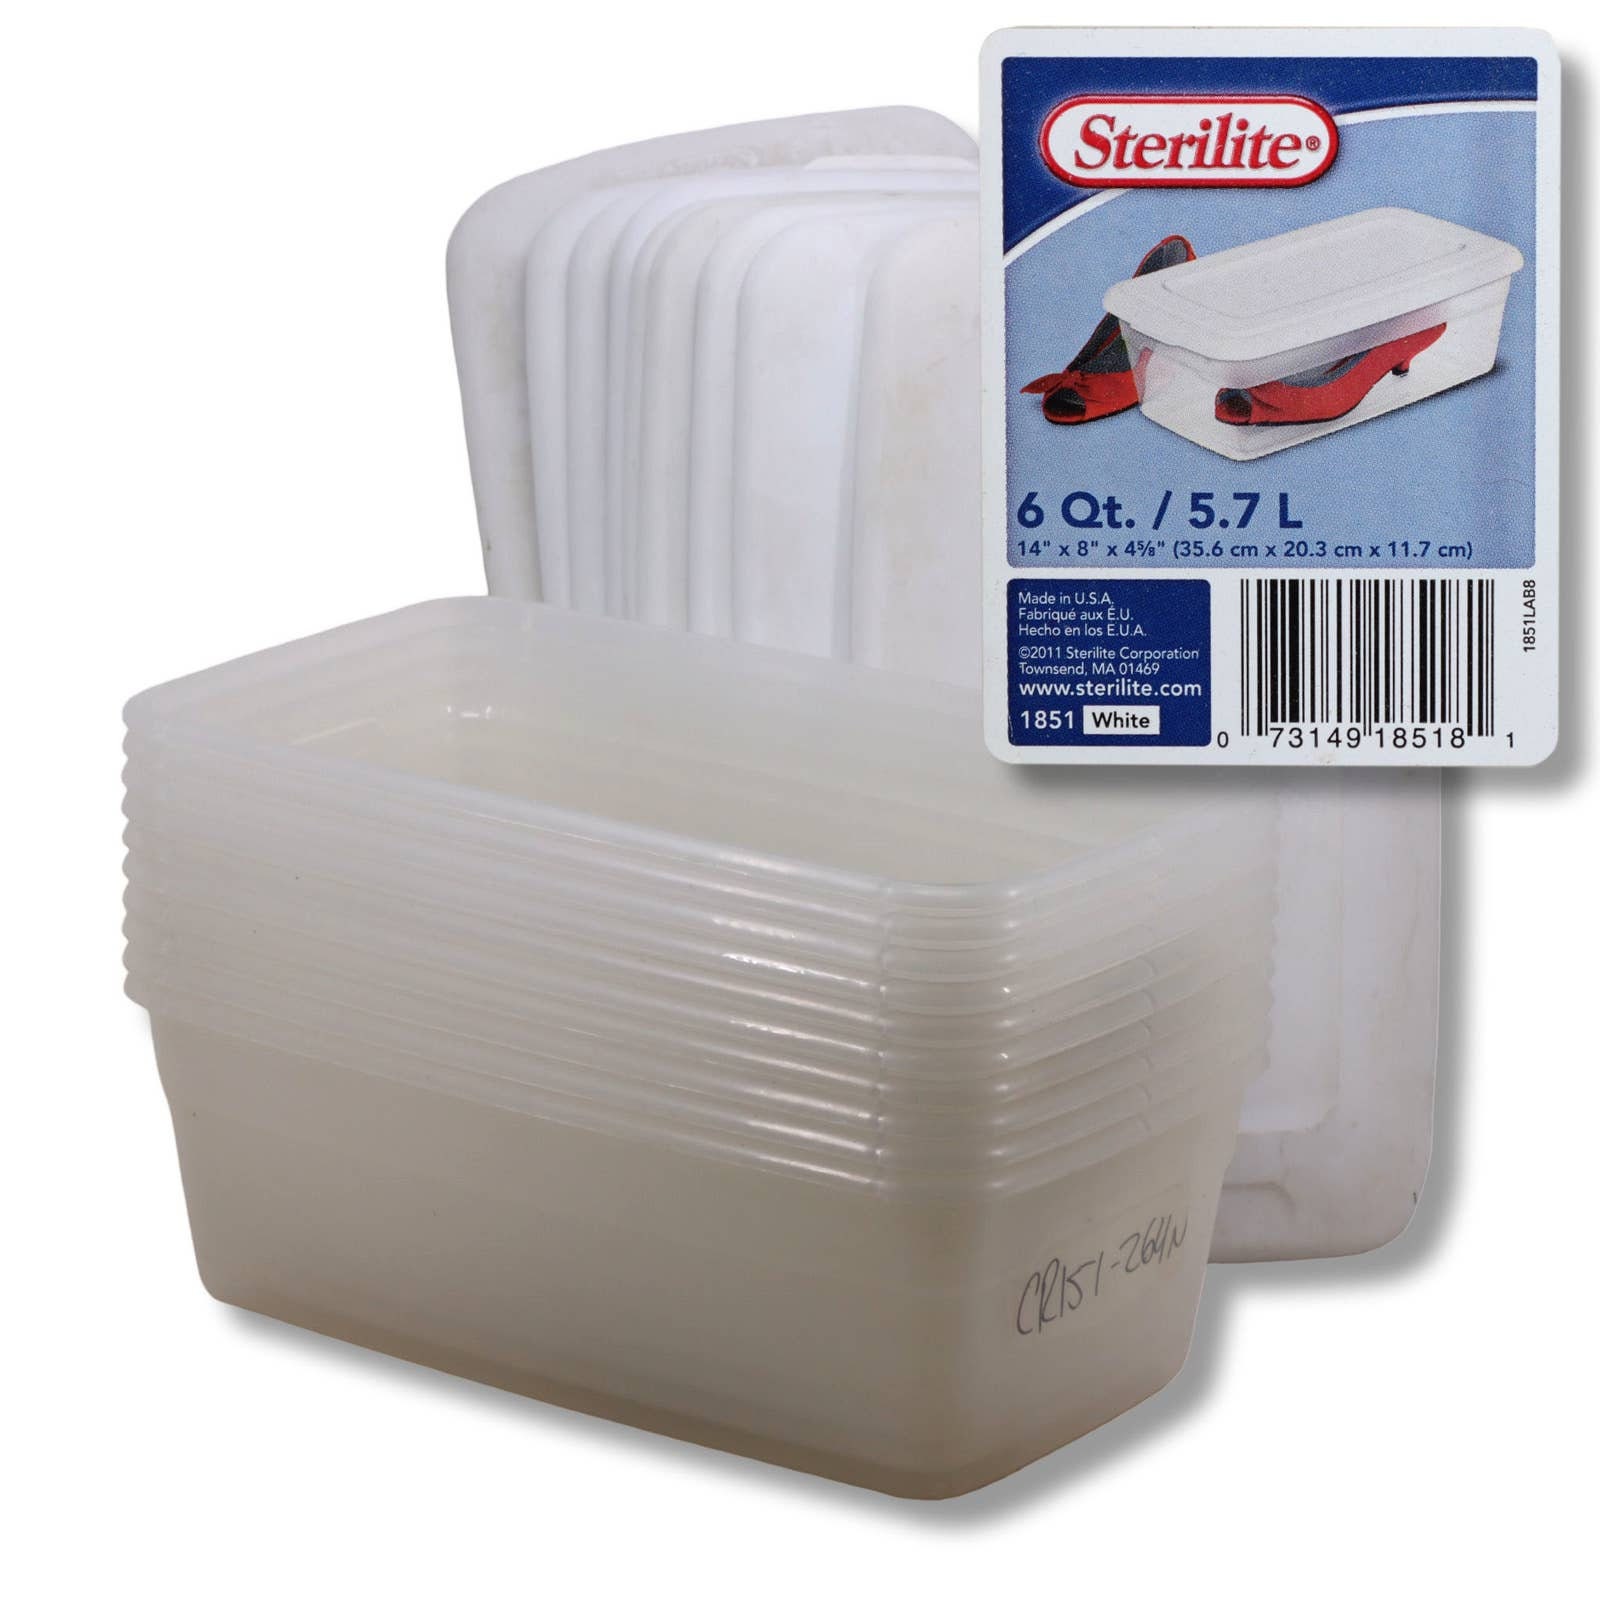 Sterilite Storage Box with Lid - White/Clear, 16 qt - City Market